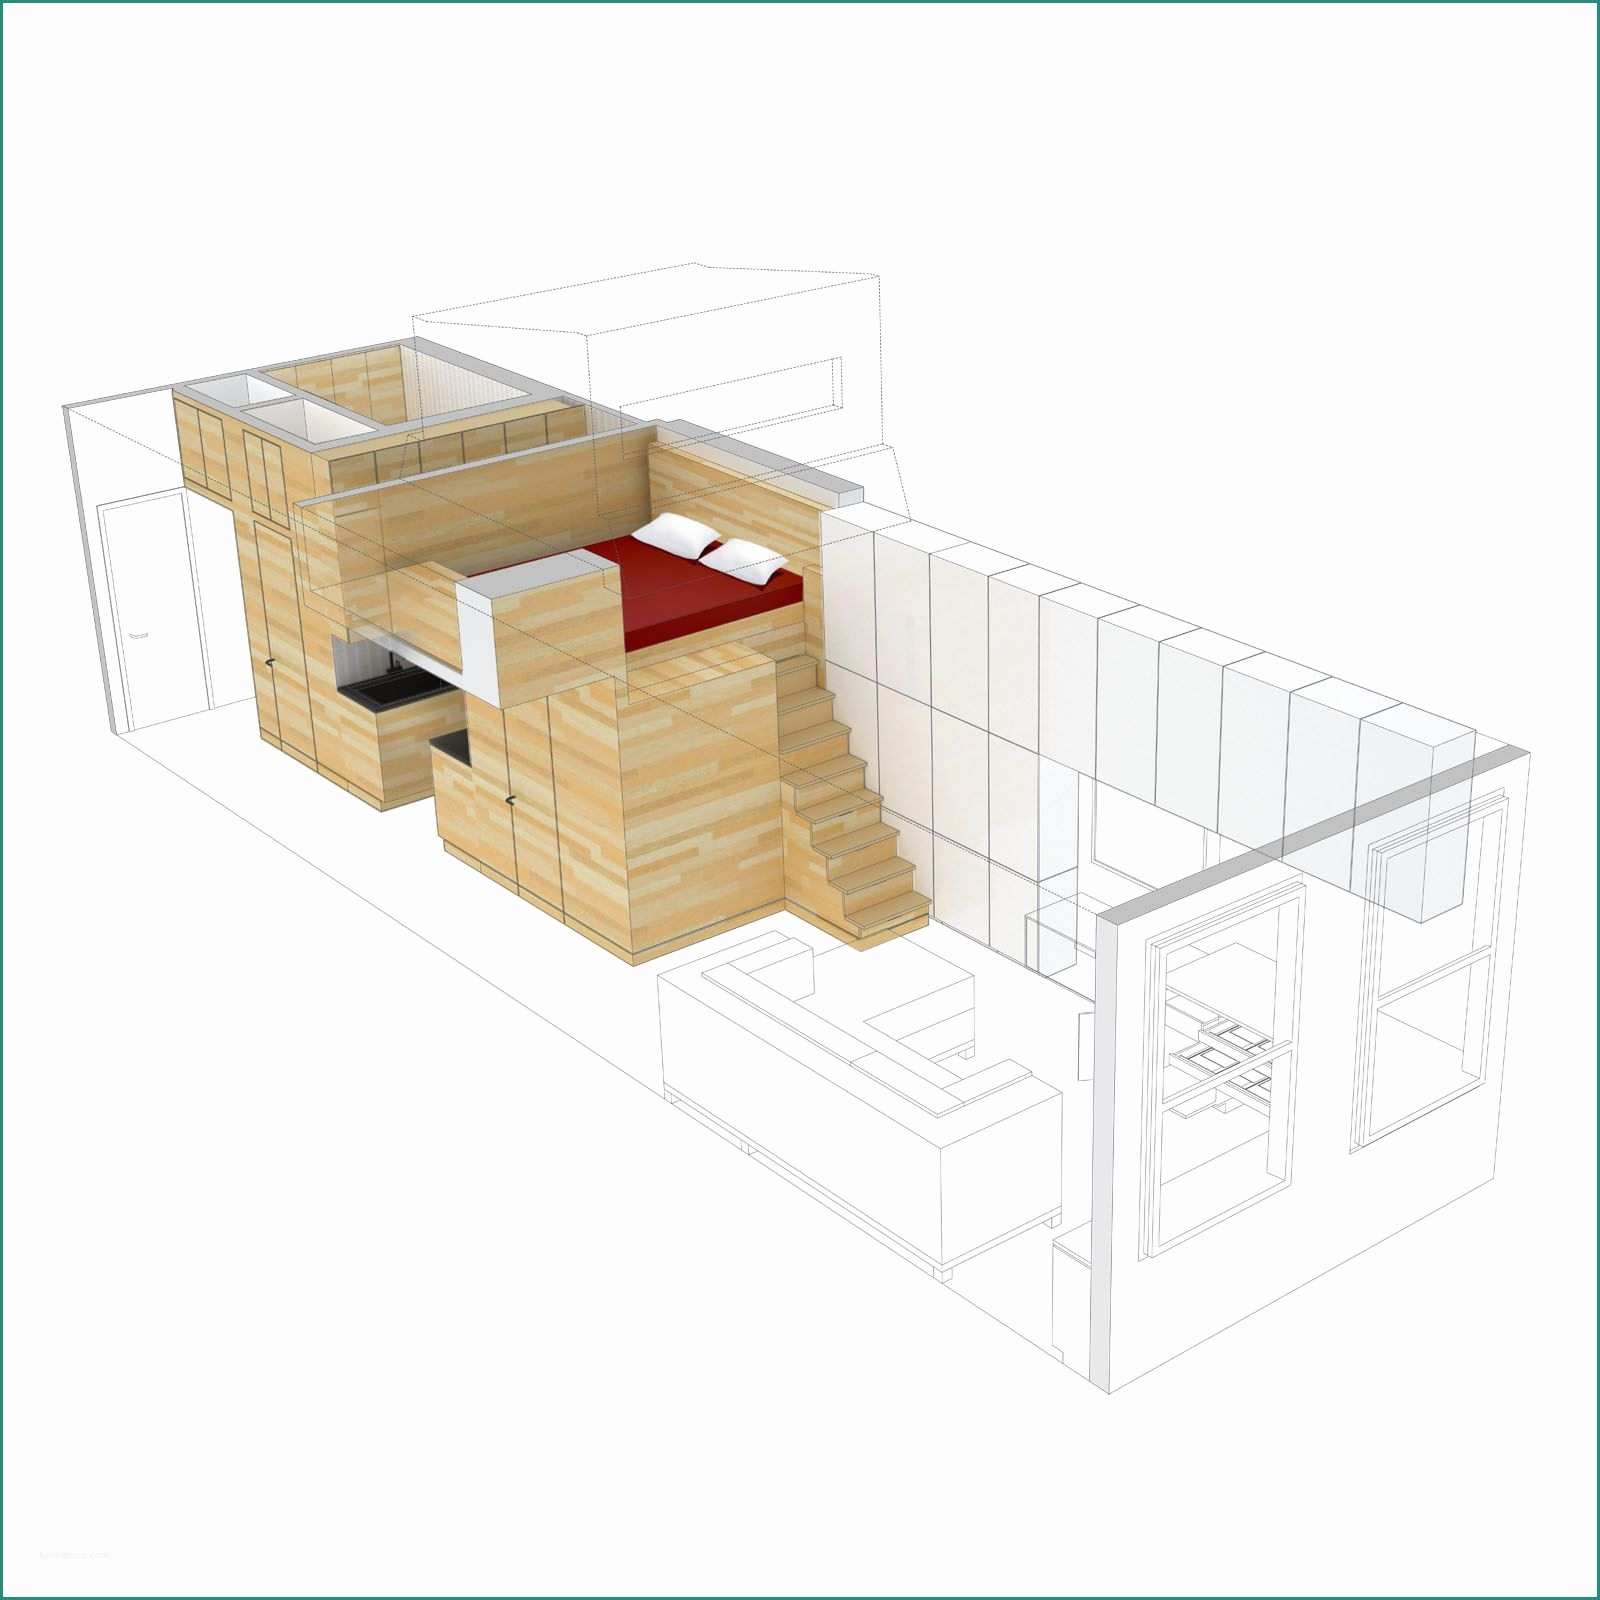 Bagni Prefabbricati Per Interni E the Wooden Volume Separates the Apartment Into Various Zones